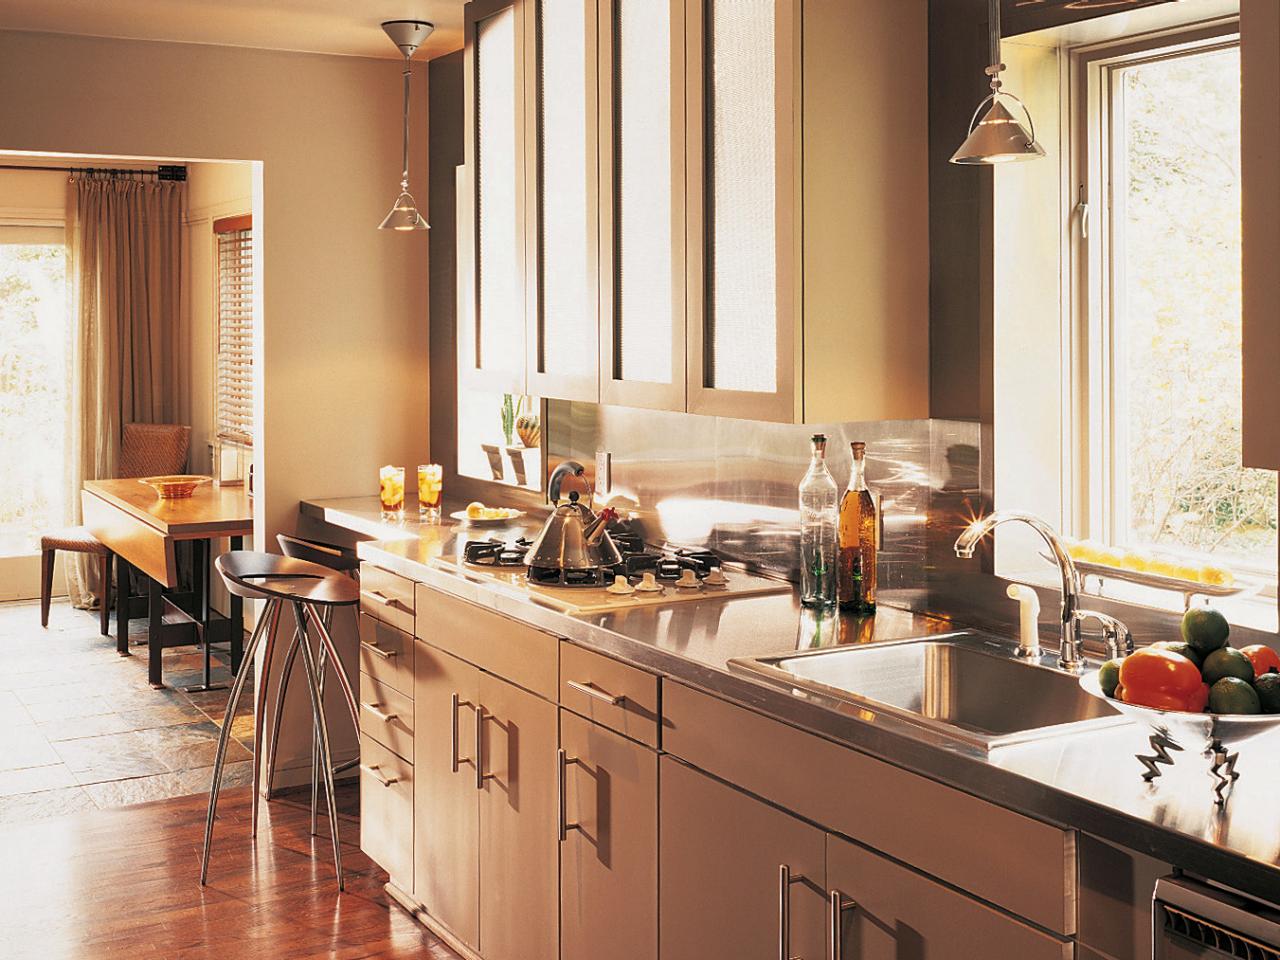 Kitchen Countertop Materials An Architect Explains